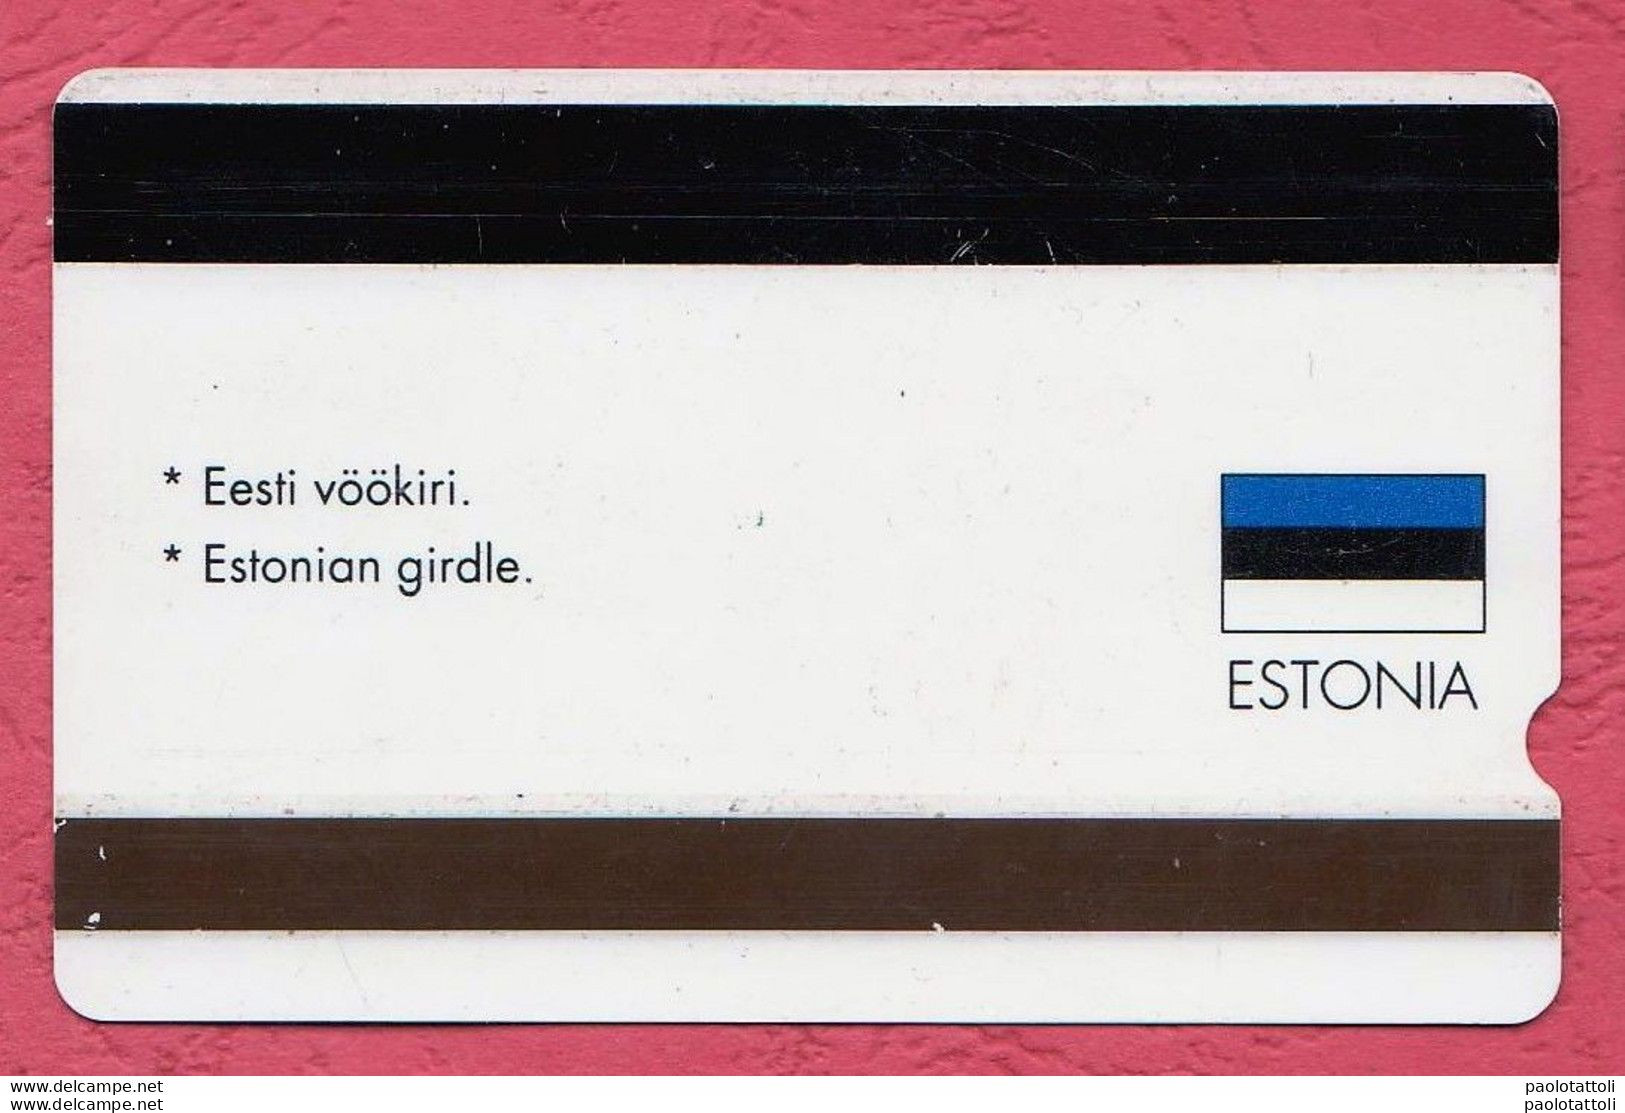 Estonia- EESTI Telefon- Estonian Girdle- Magnetic Phone Card Used By 20EEK - Estonia